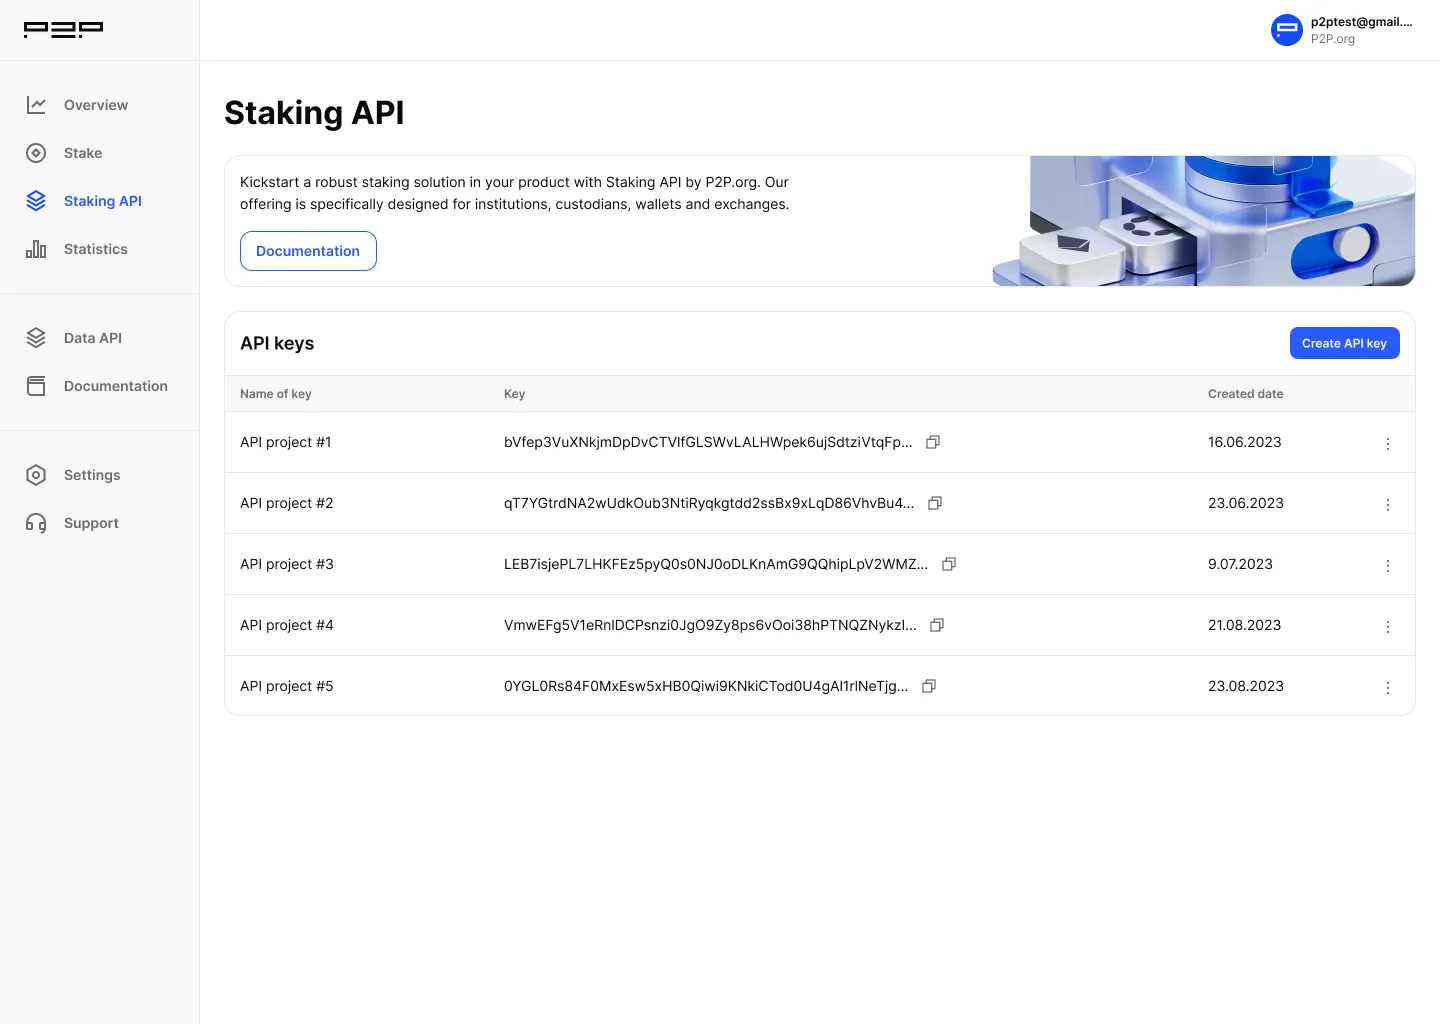 p2p.org staking API screenshot